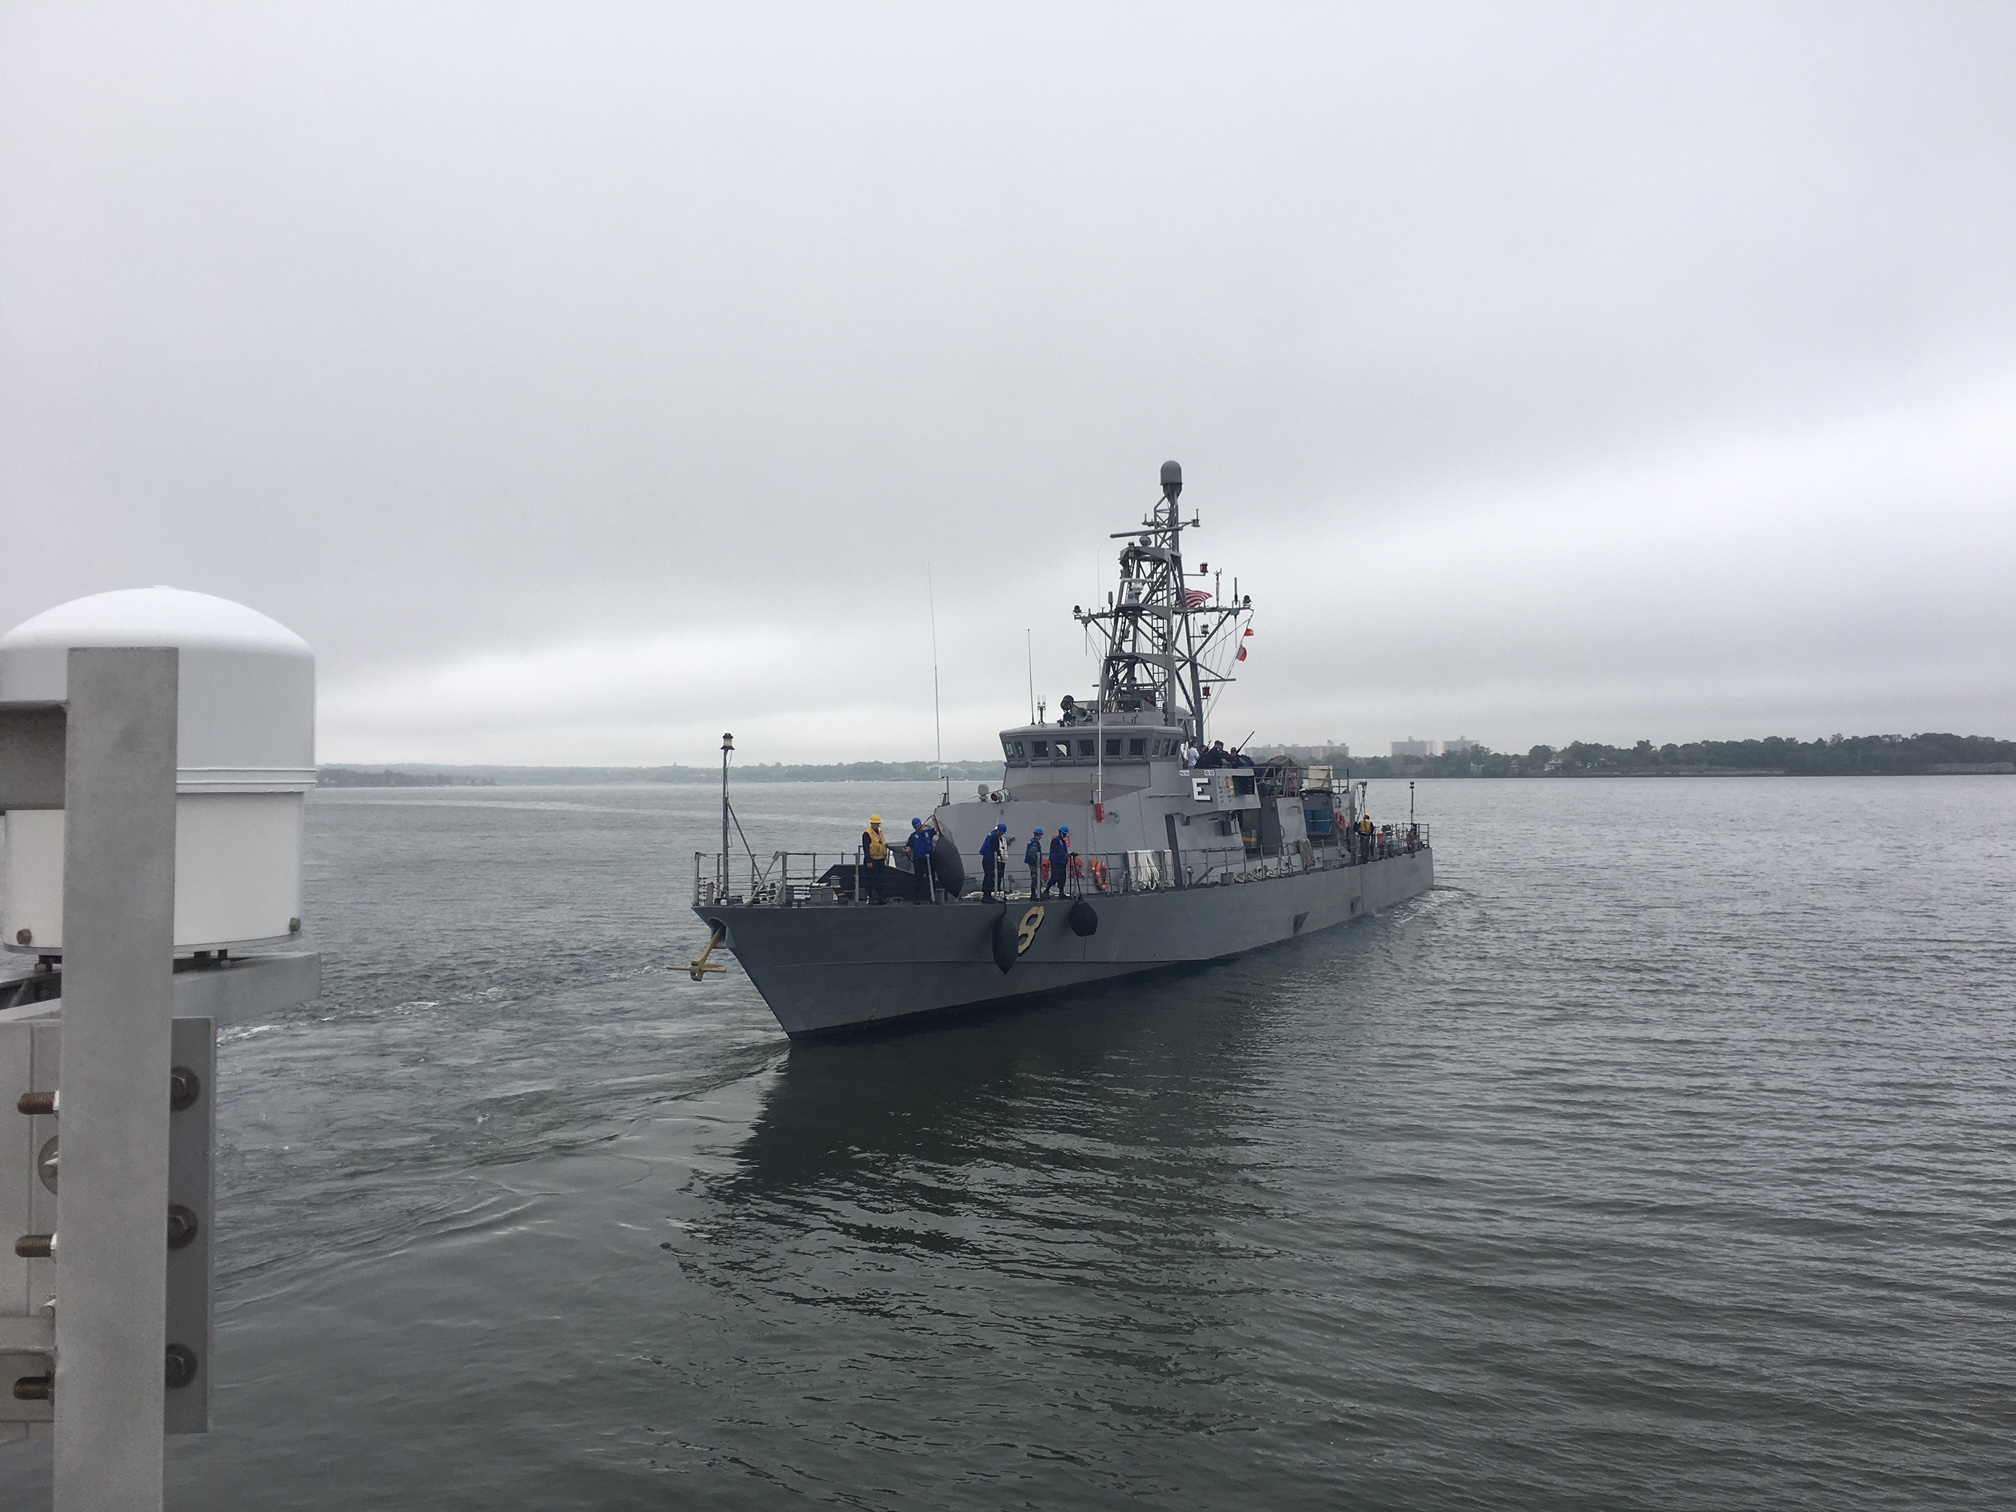 USS Zephyr departs Mallory Pier